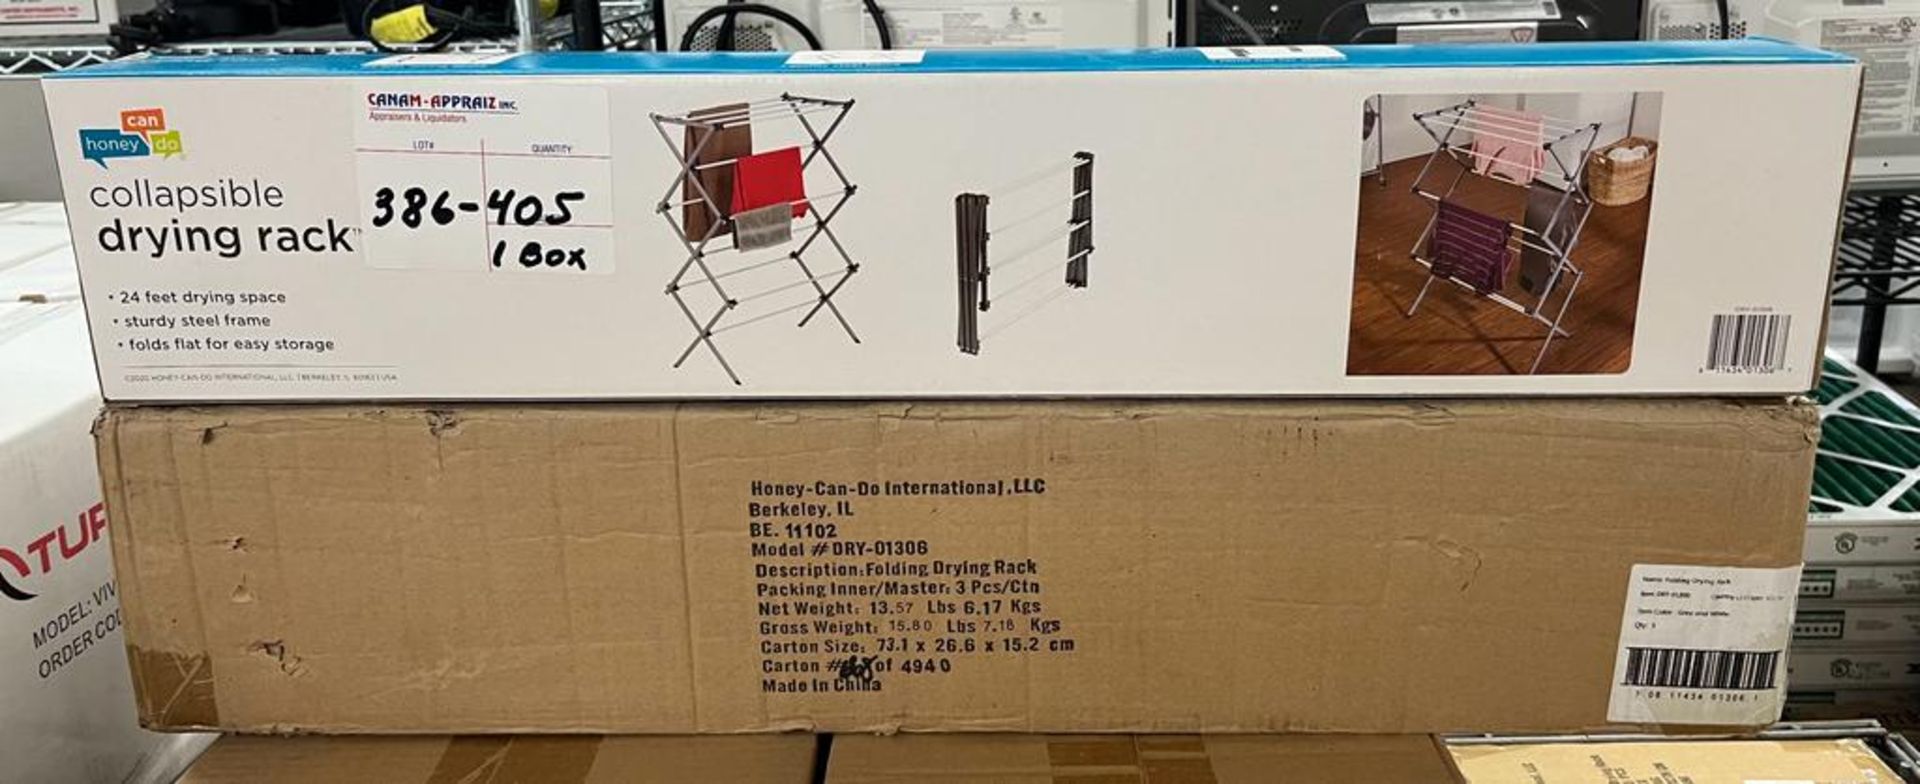 HoneyCanDo - 24 Ft Collapsible Drying Rack - Mo#: DRY-01306 - Quantity: 1 Box, 3pcs